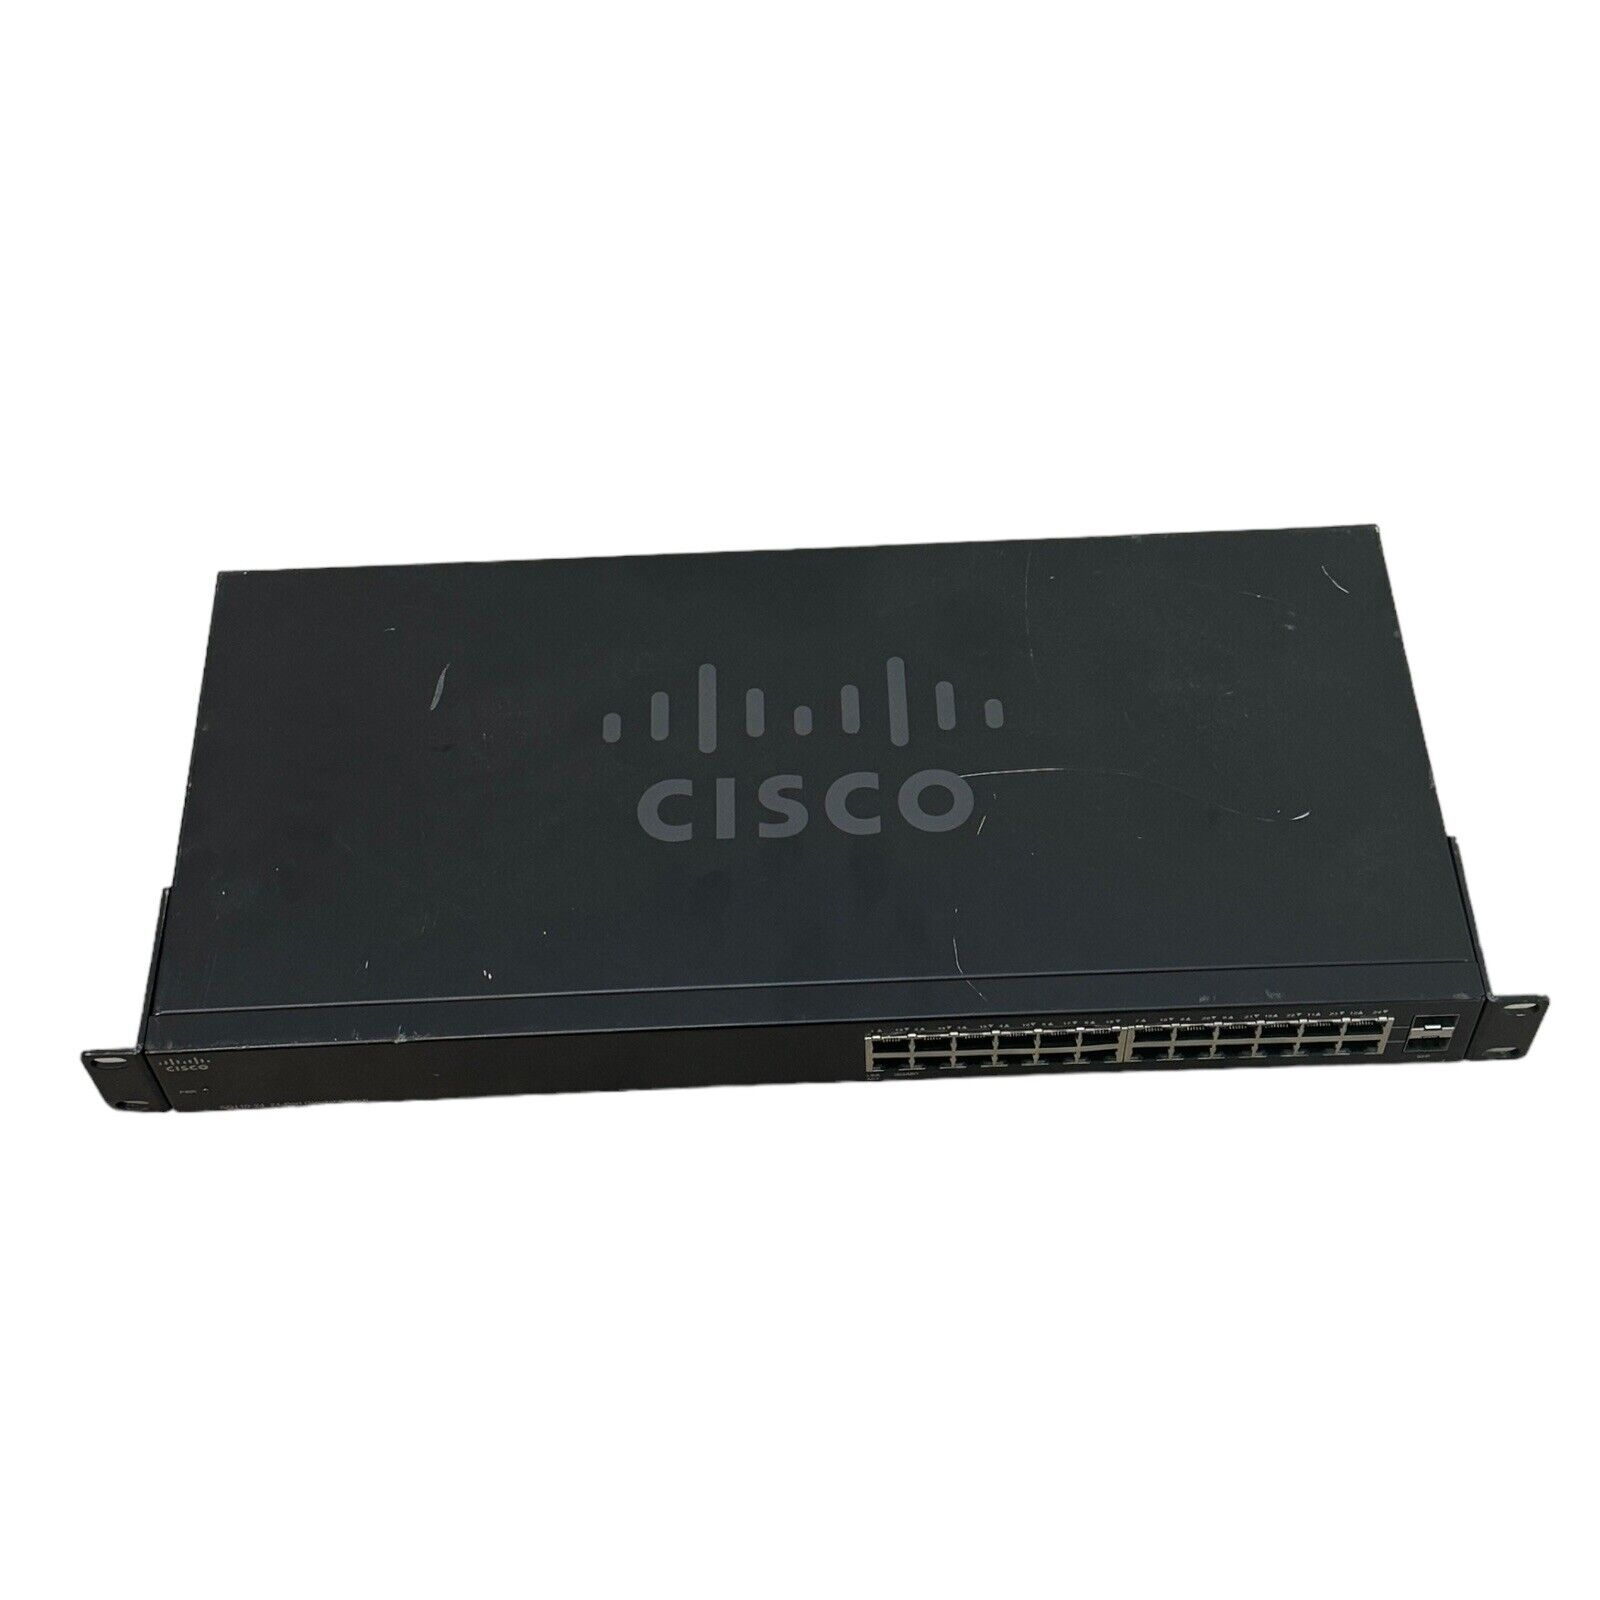 Cisco SG110-24HP 24-Port Gigabit PoE Managed Switch W/ Rack Mounts